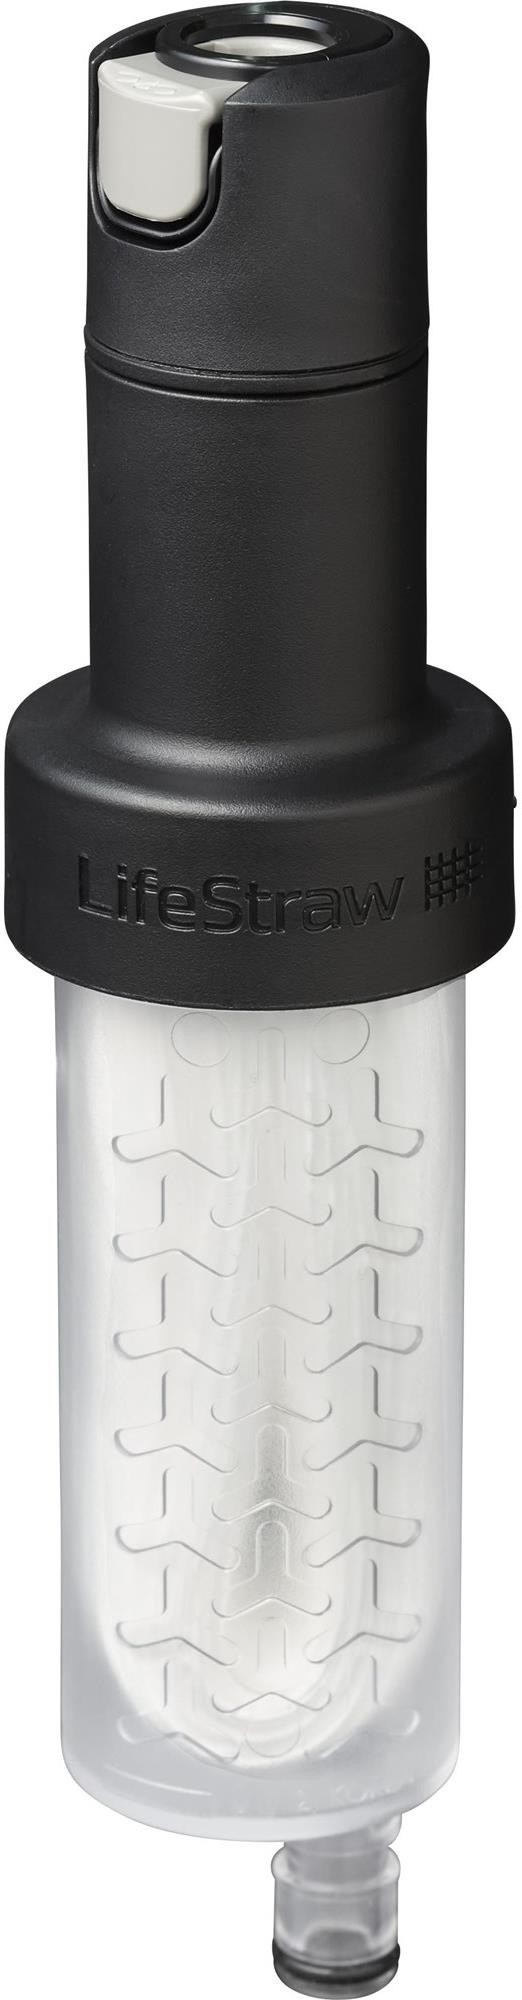 Lifestraw Reservoir Filter Kit image 0